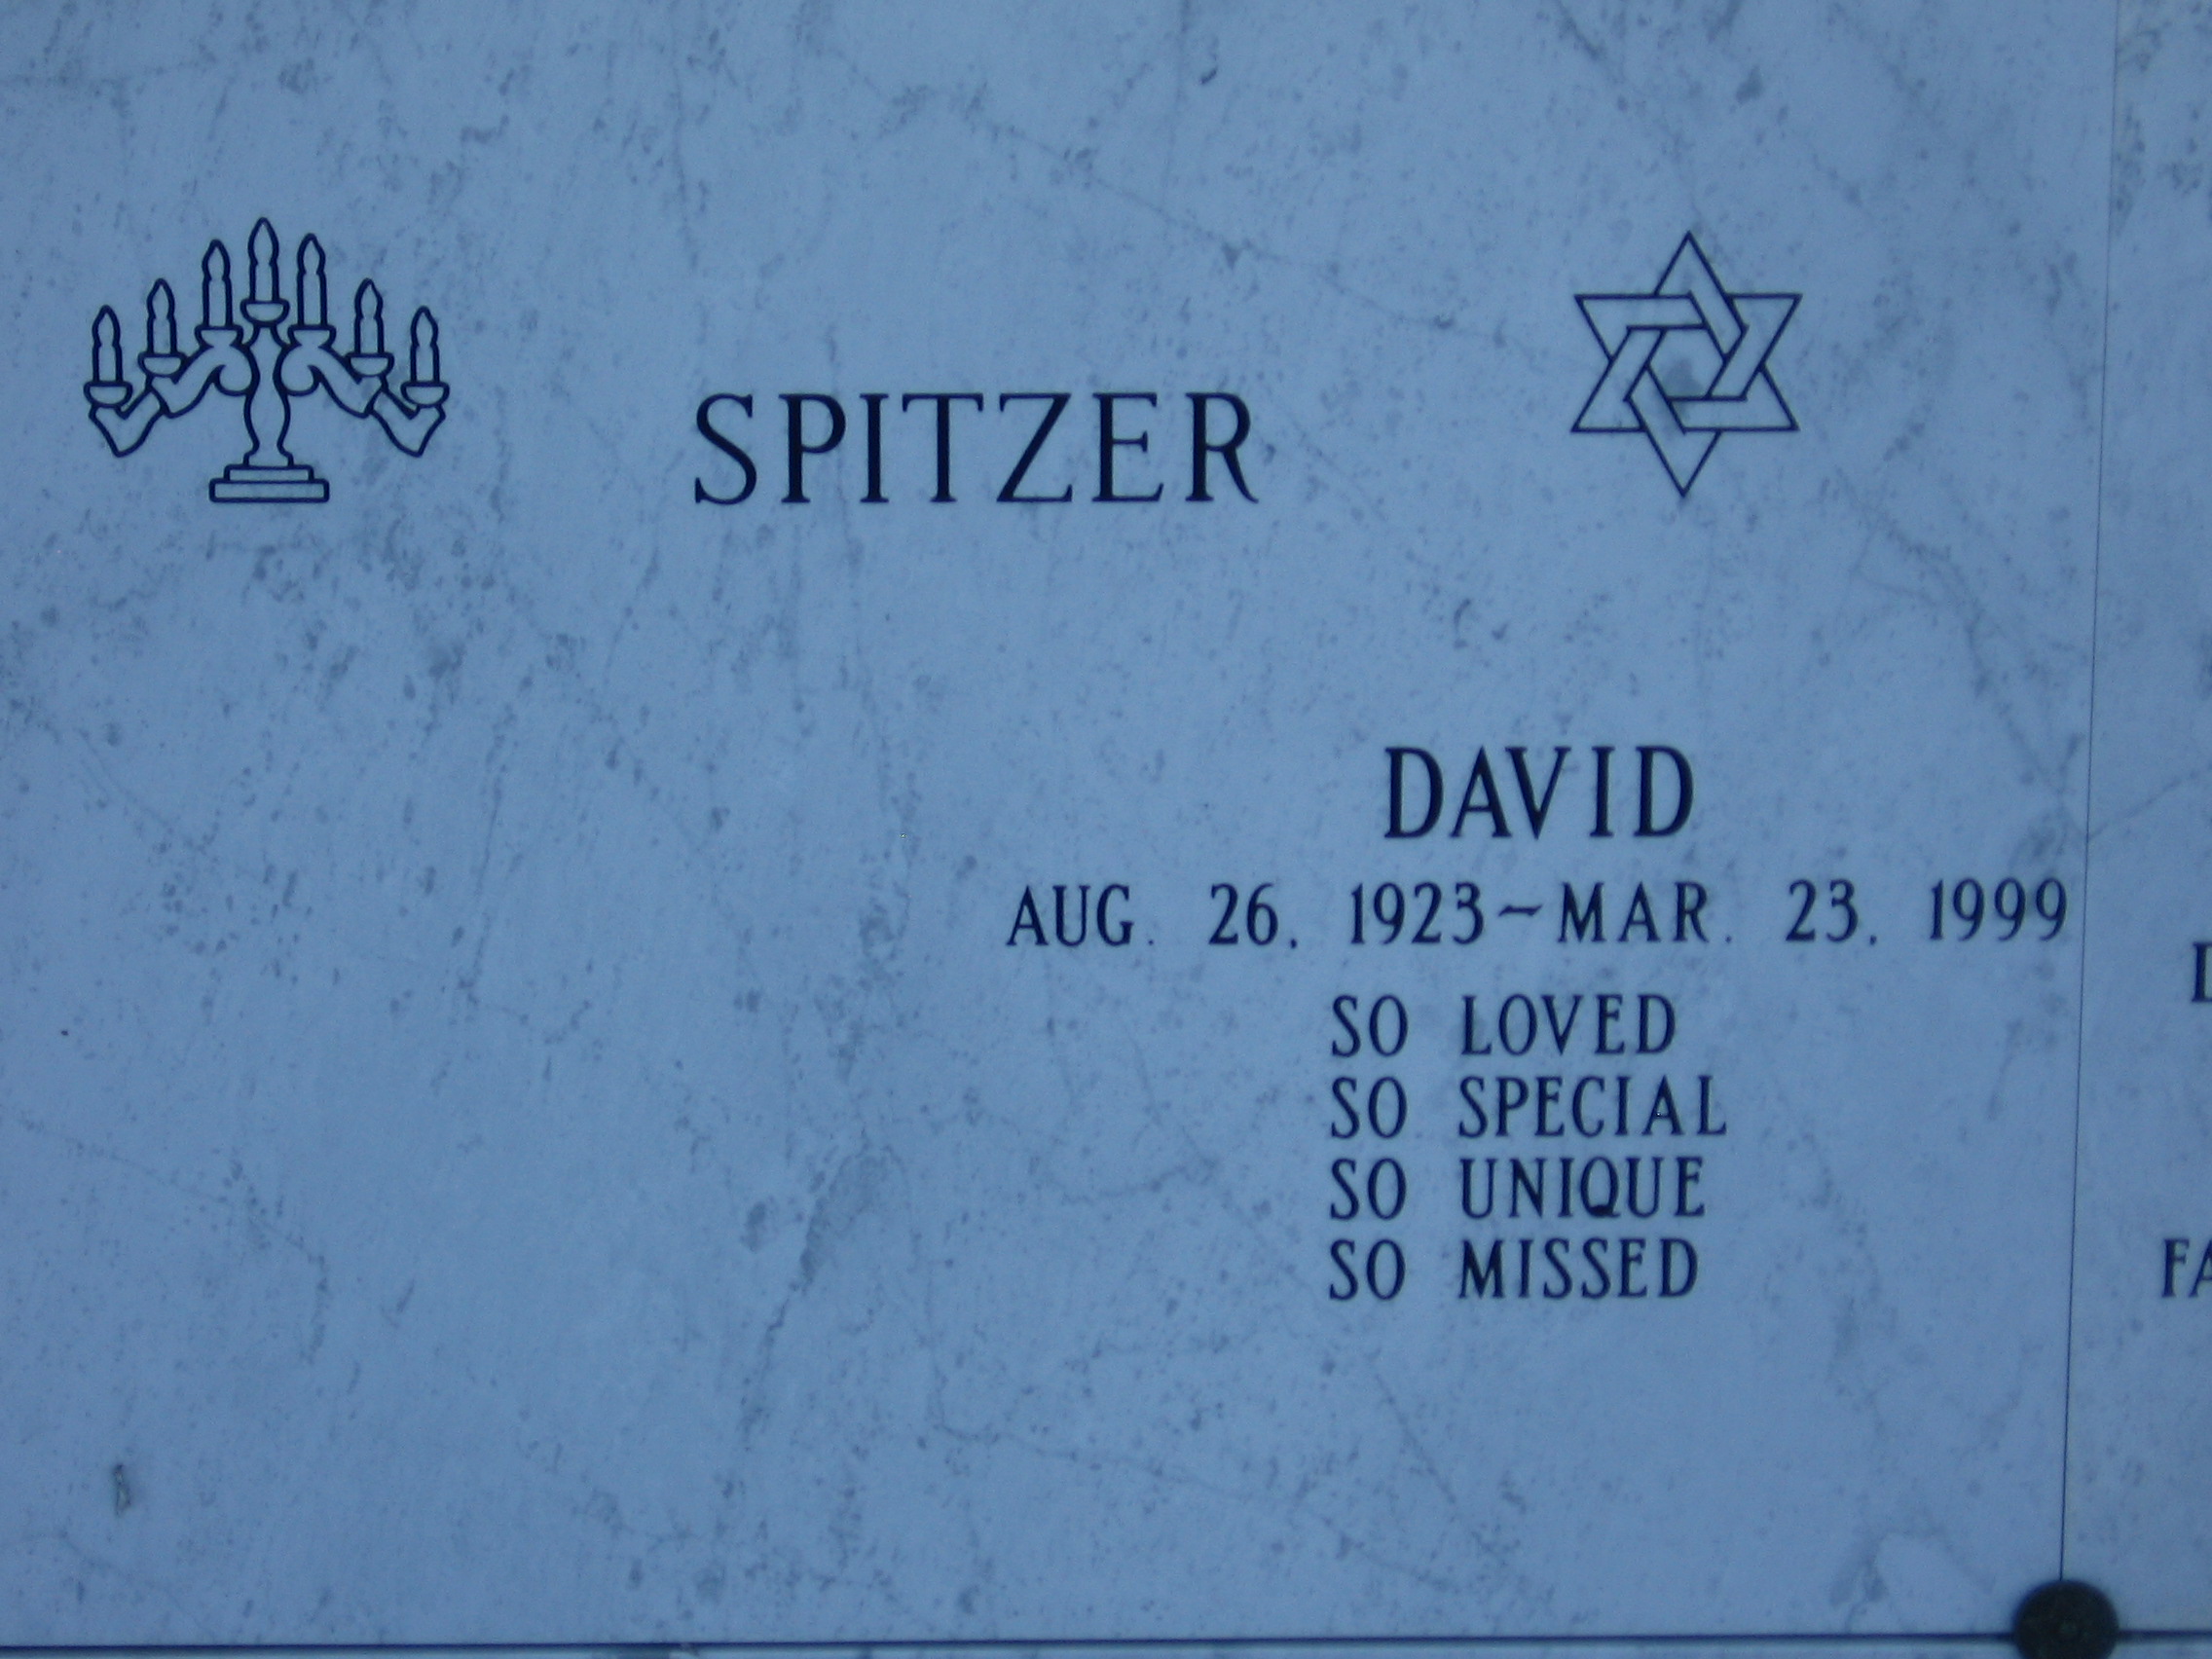 David Spitzer